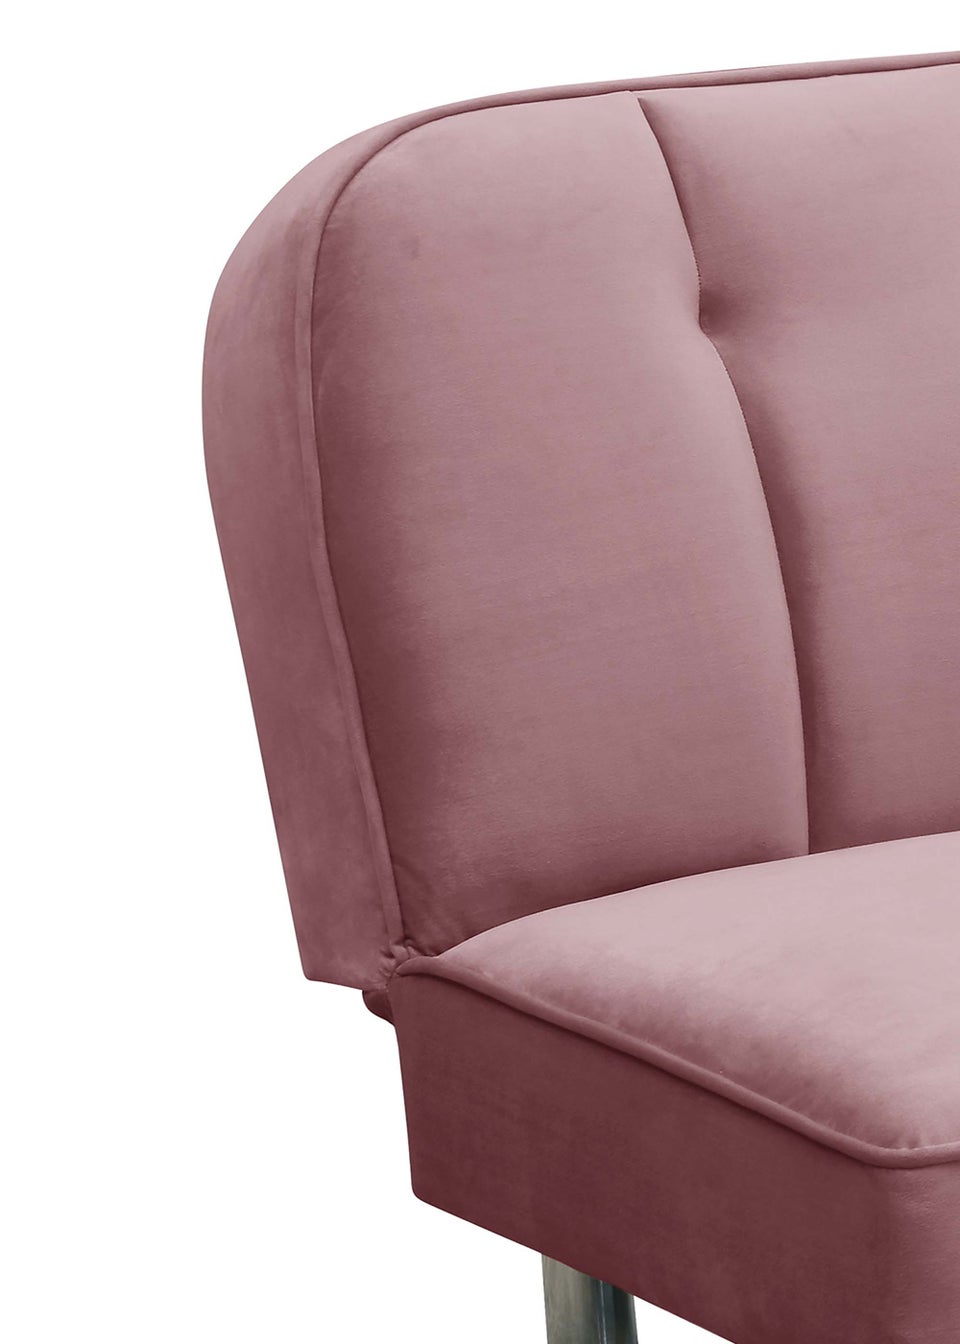 LPD Furniture Brighton Sofa Bed Pink